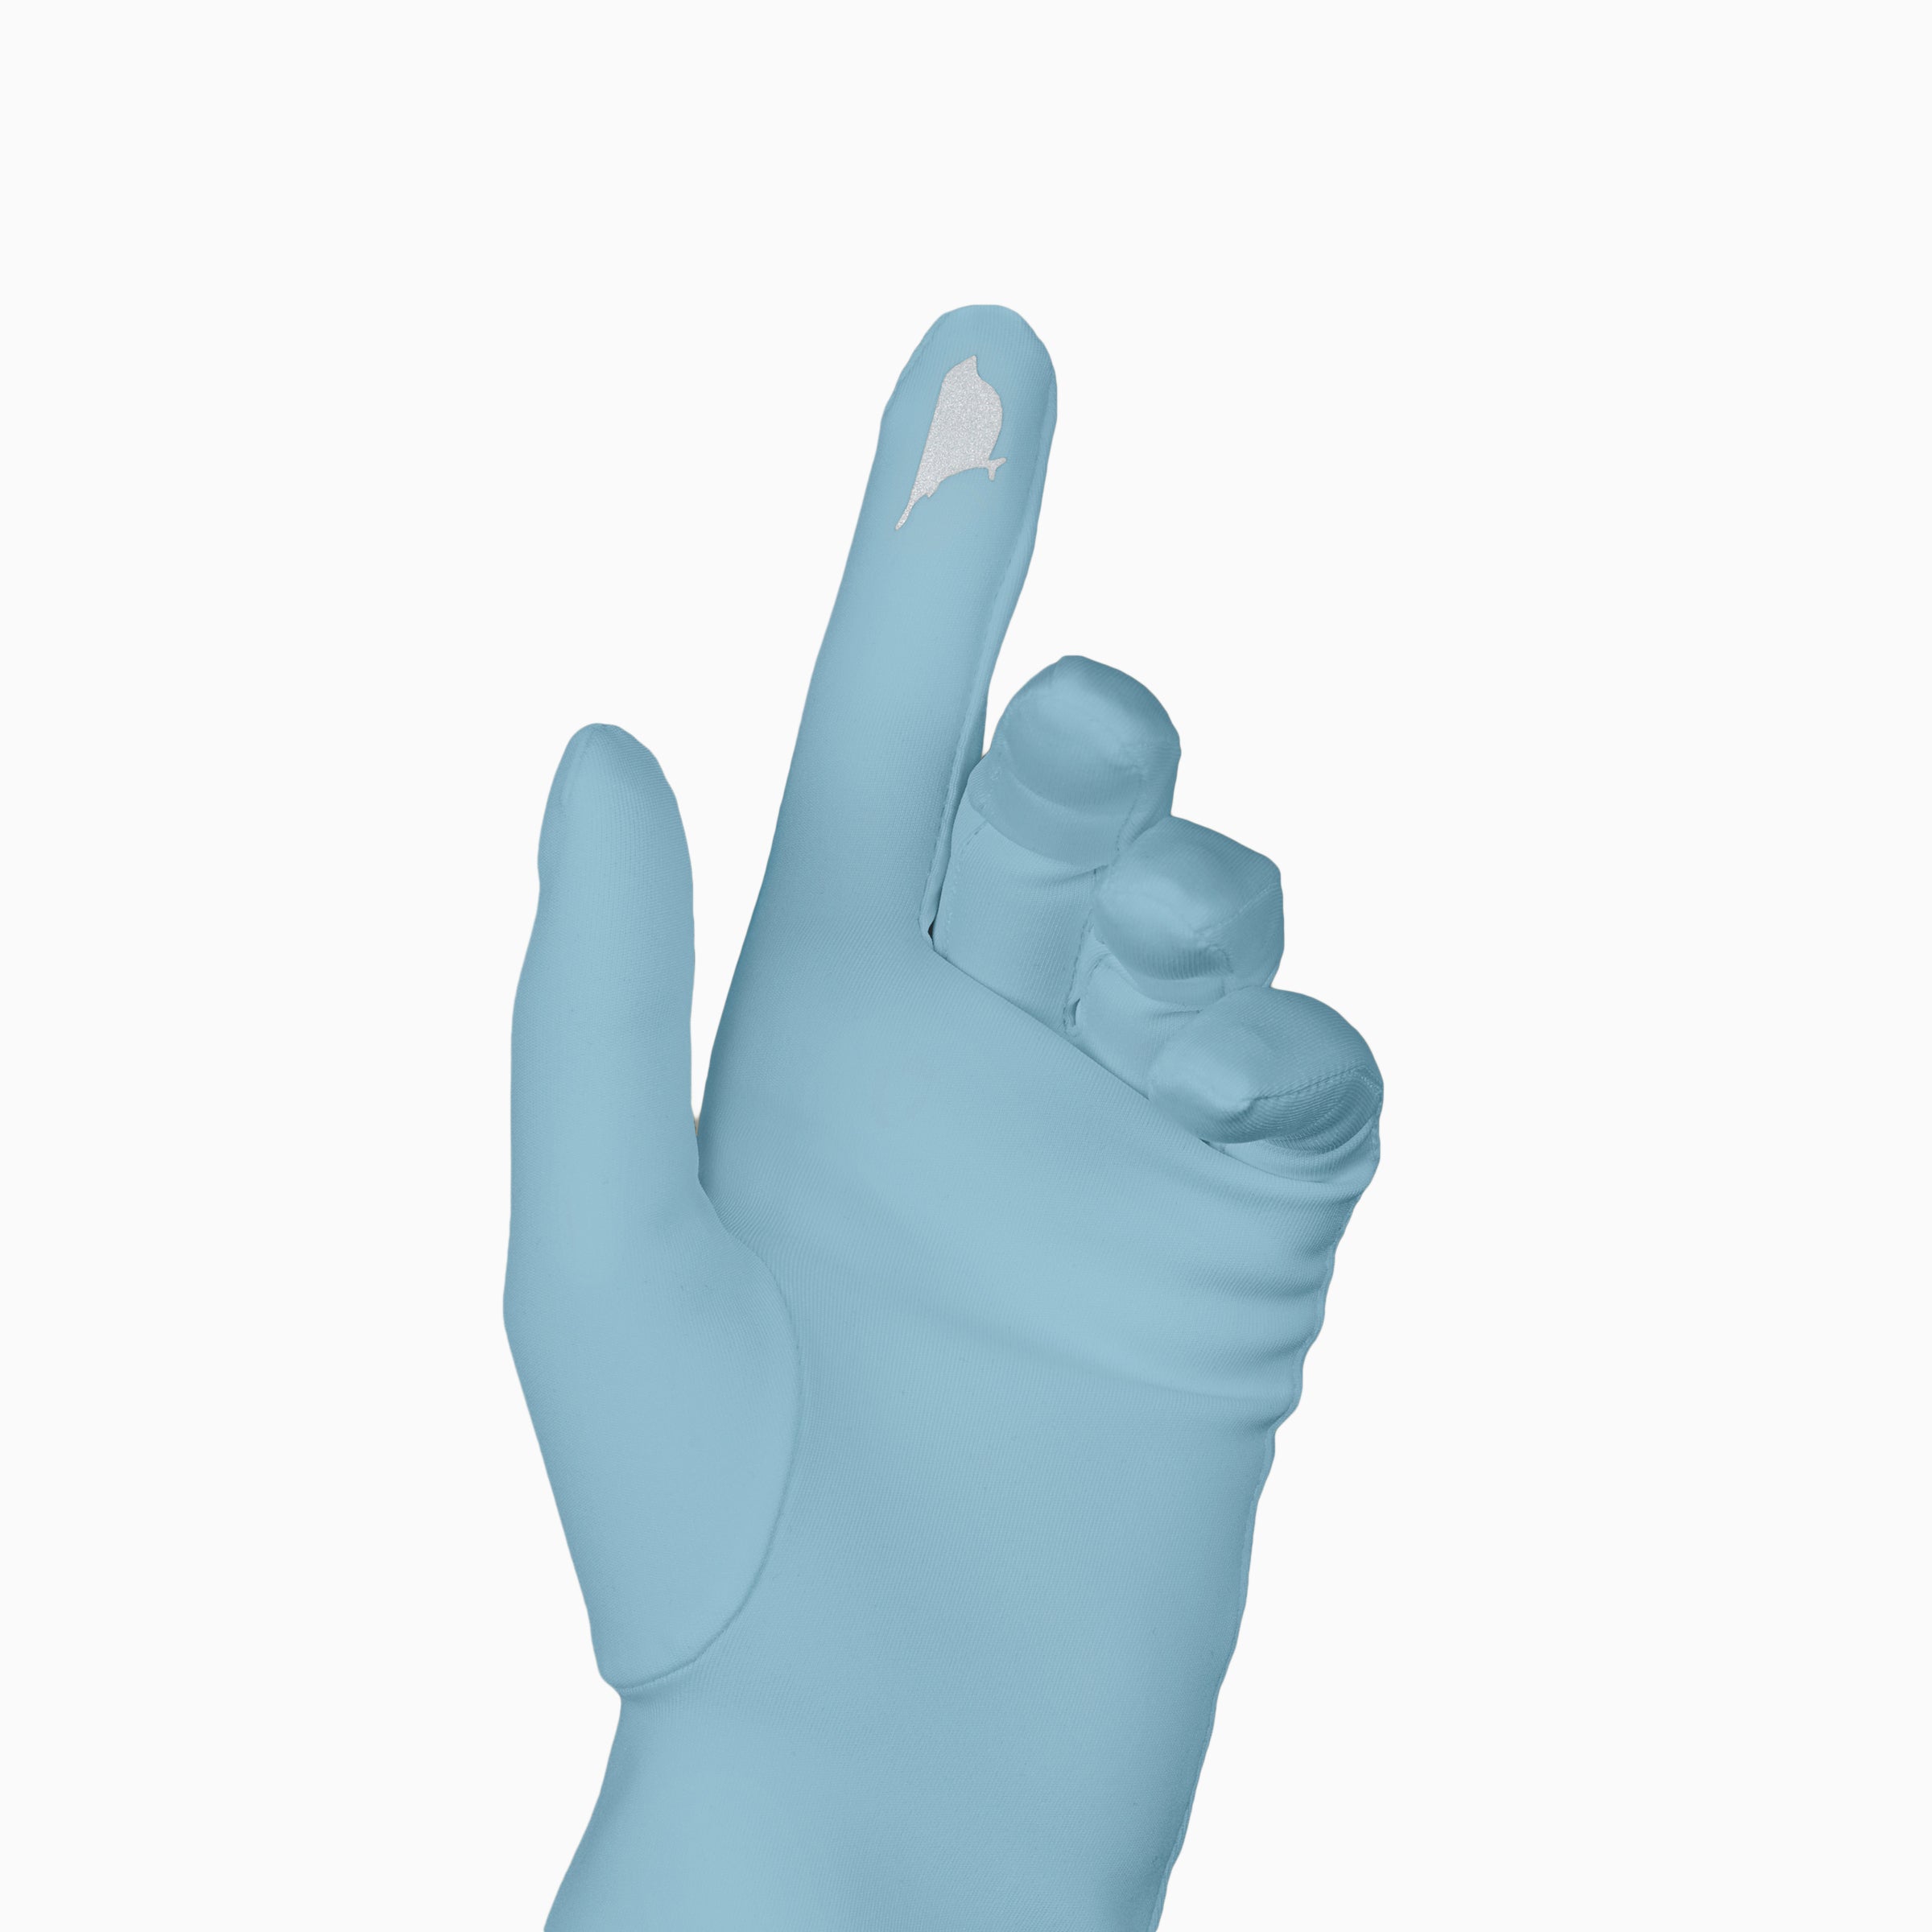 Light Blue women&#39;s glove against white background showing technology friendly index finger.